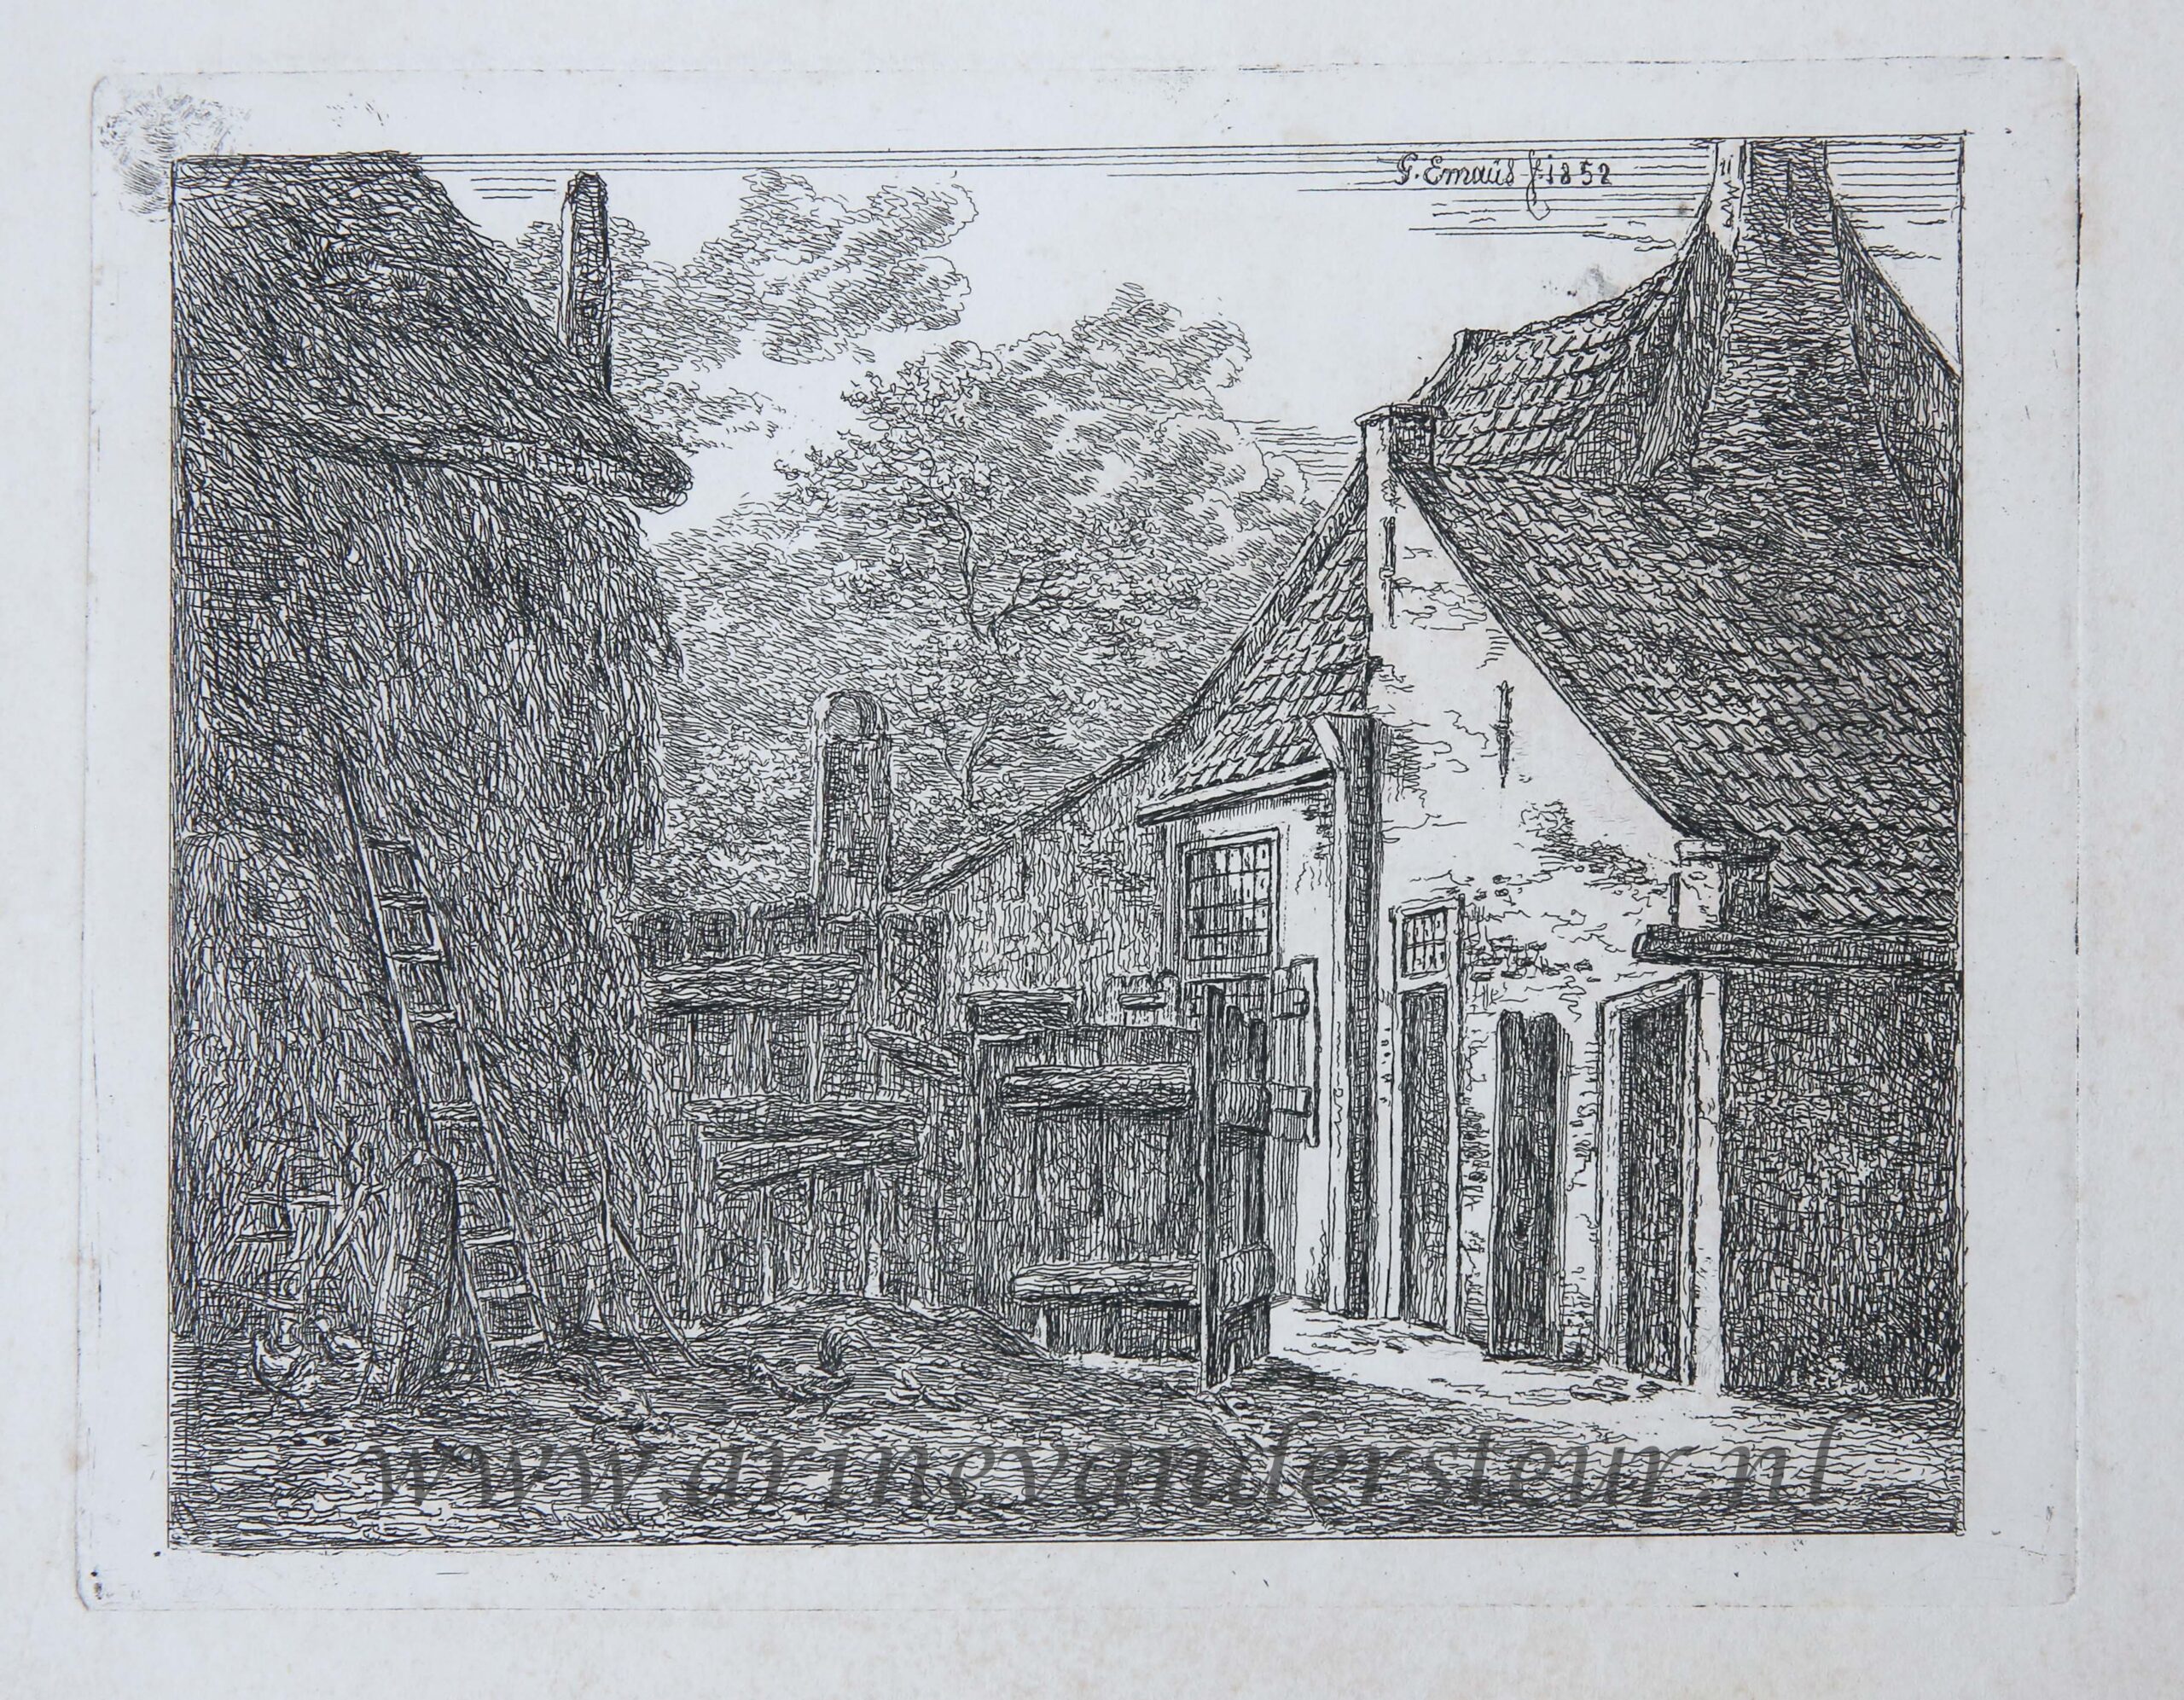 [Original etching, ets] G.E. de Micault. The farm at Pernis. (state I), published 1852.